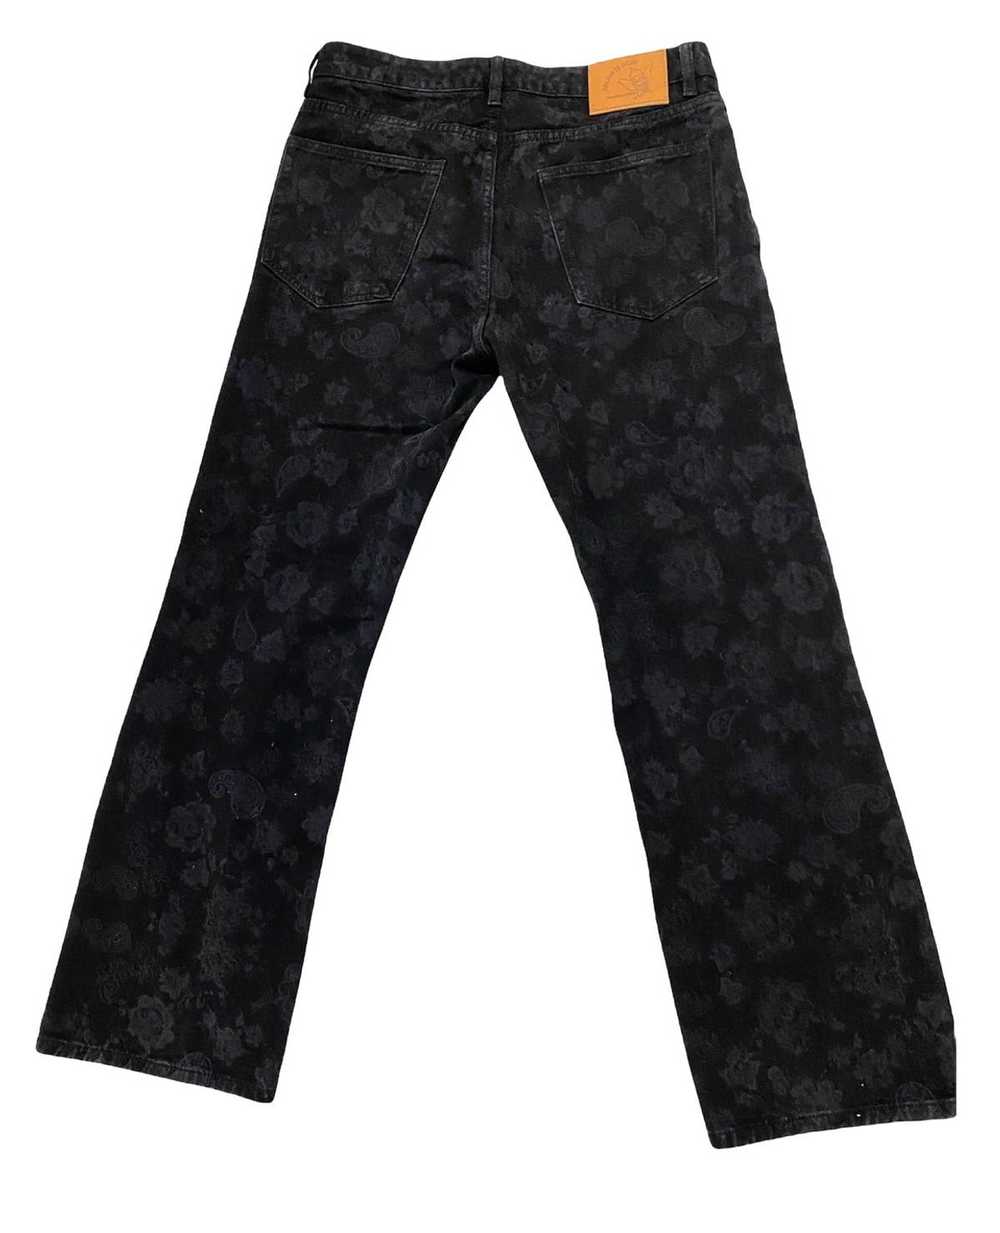 Japanese Brand Laser imprinted bandana print jeans - image 2